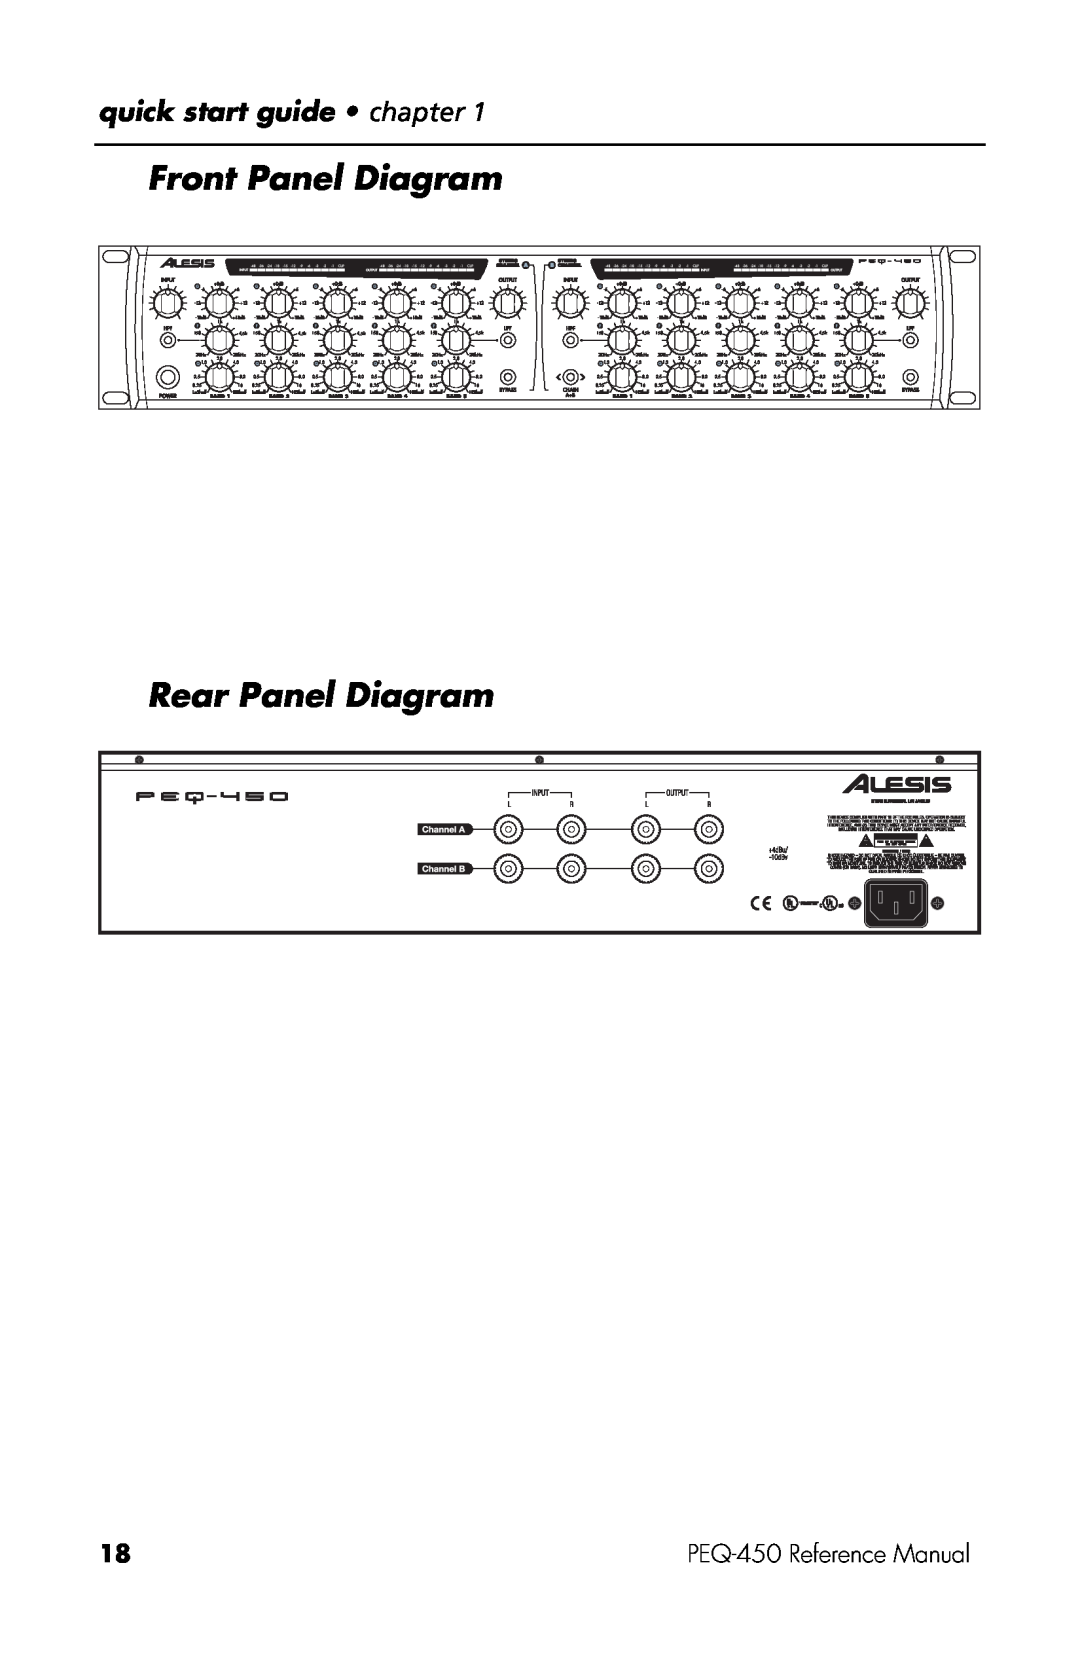 Alesis manual Front Panel Diagram, Rear Panel Diagram, PEQ-450Reference Manual 